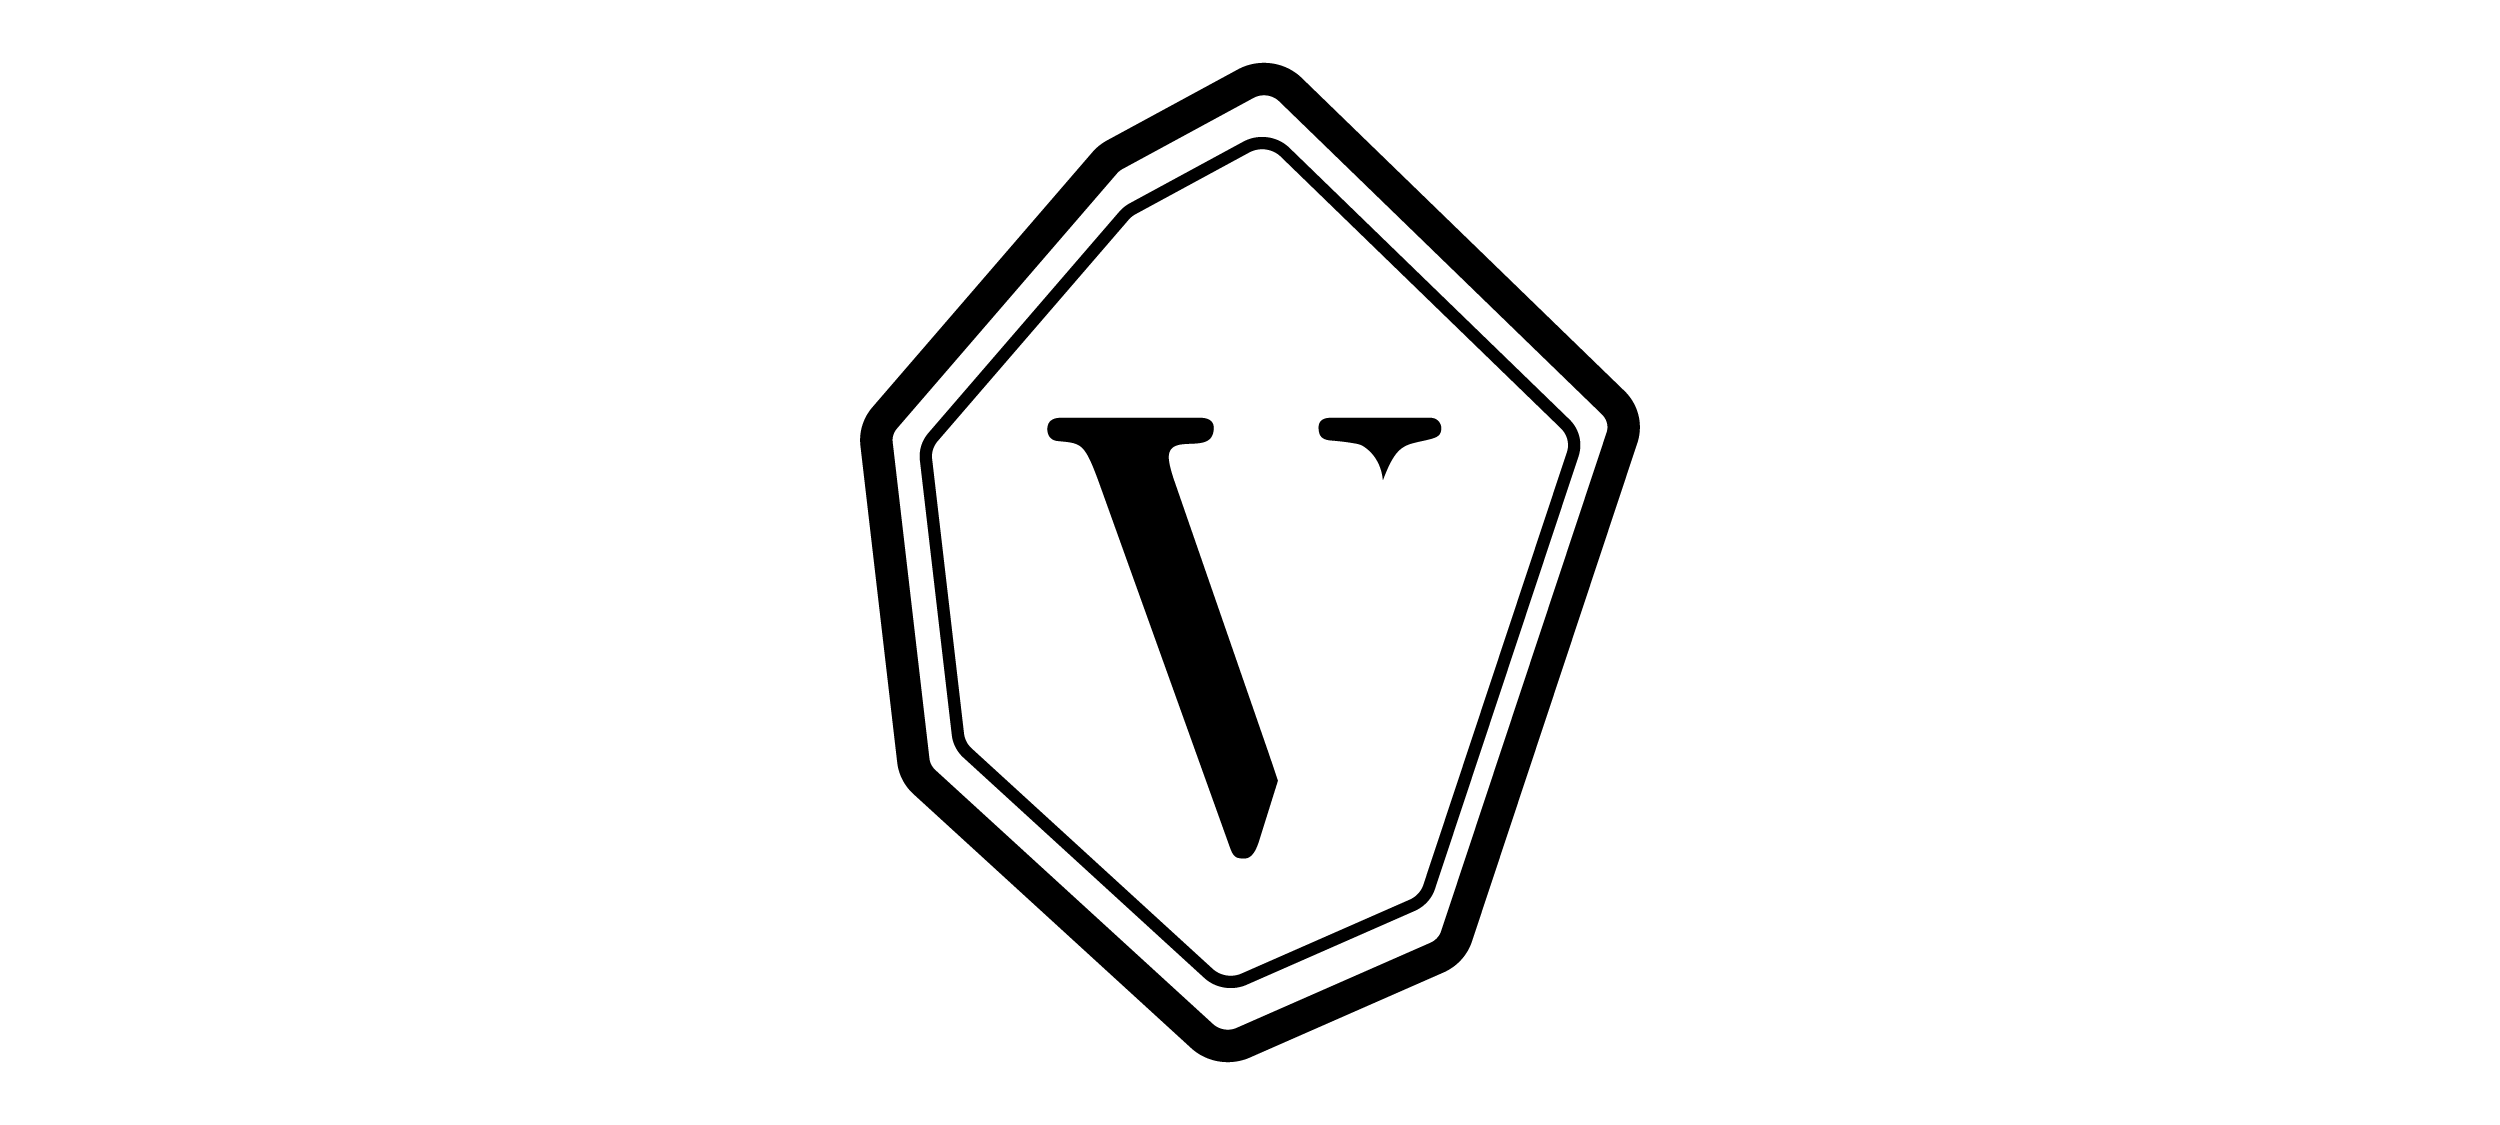 Veniroe icon logo in black